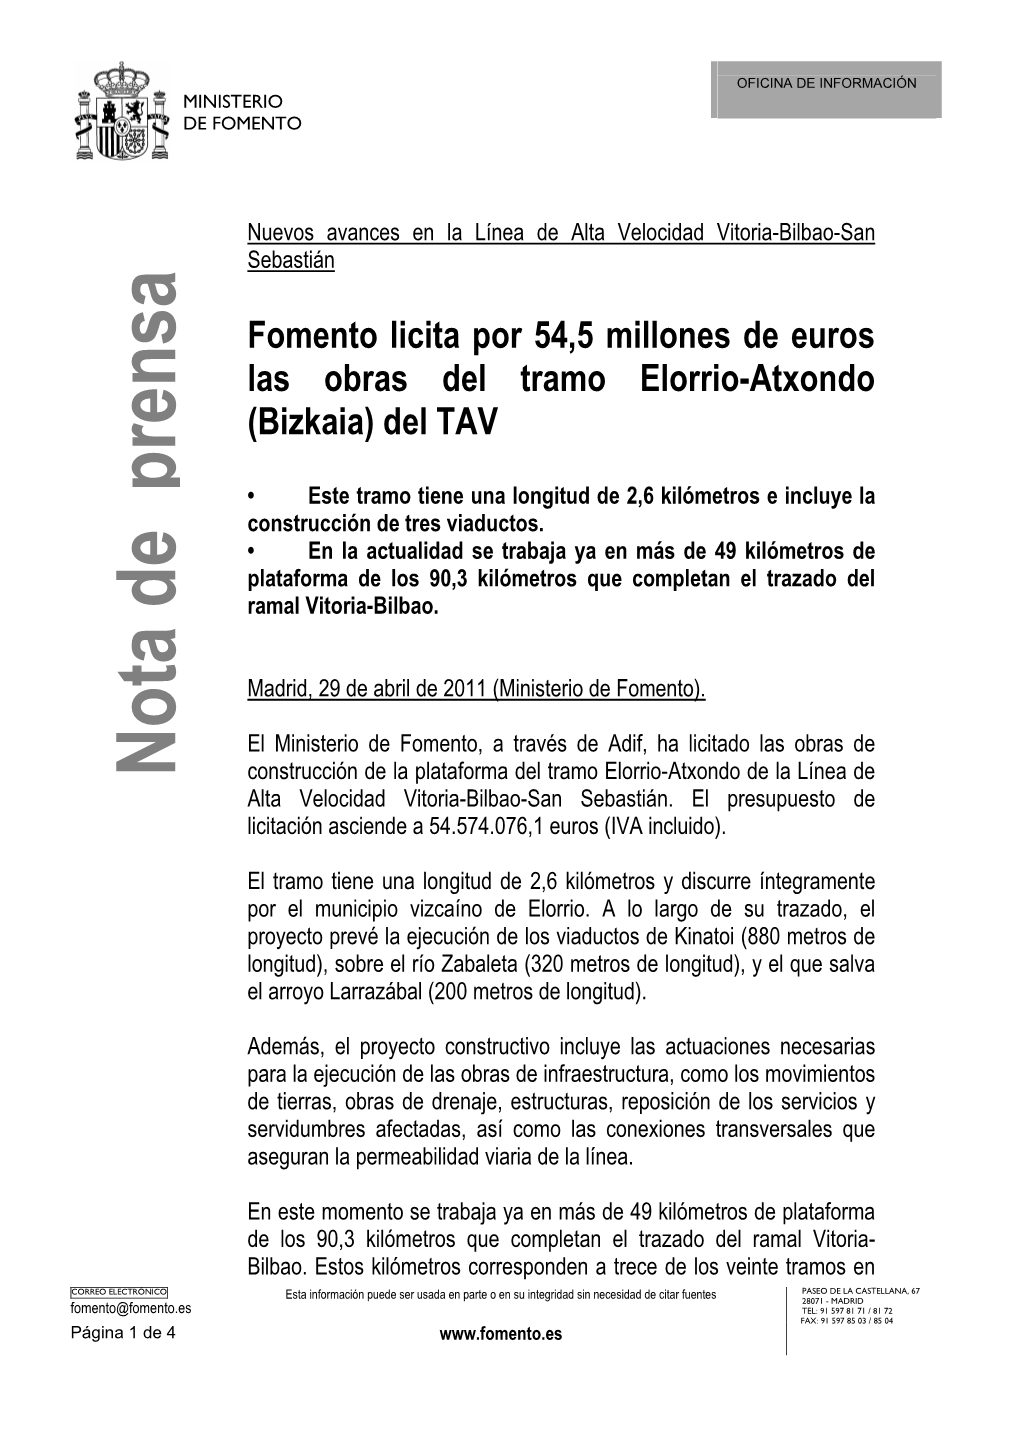 Fomento Licita Por 54,5 Millones De Euros Las Obras Del Tramo Elorrio-Atxondo (Bizkaia) Del TAV